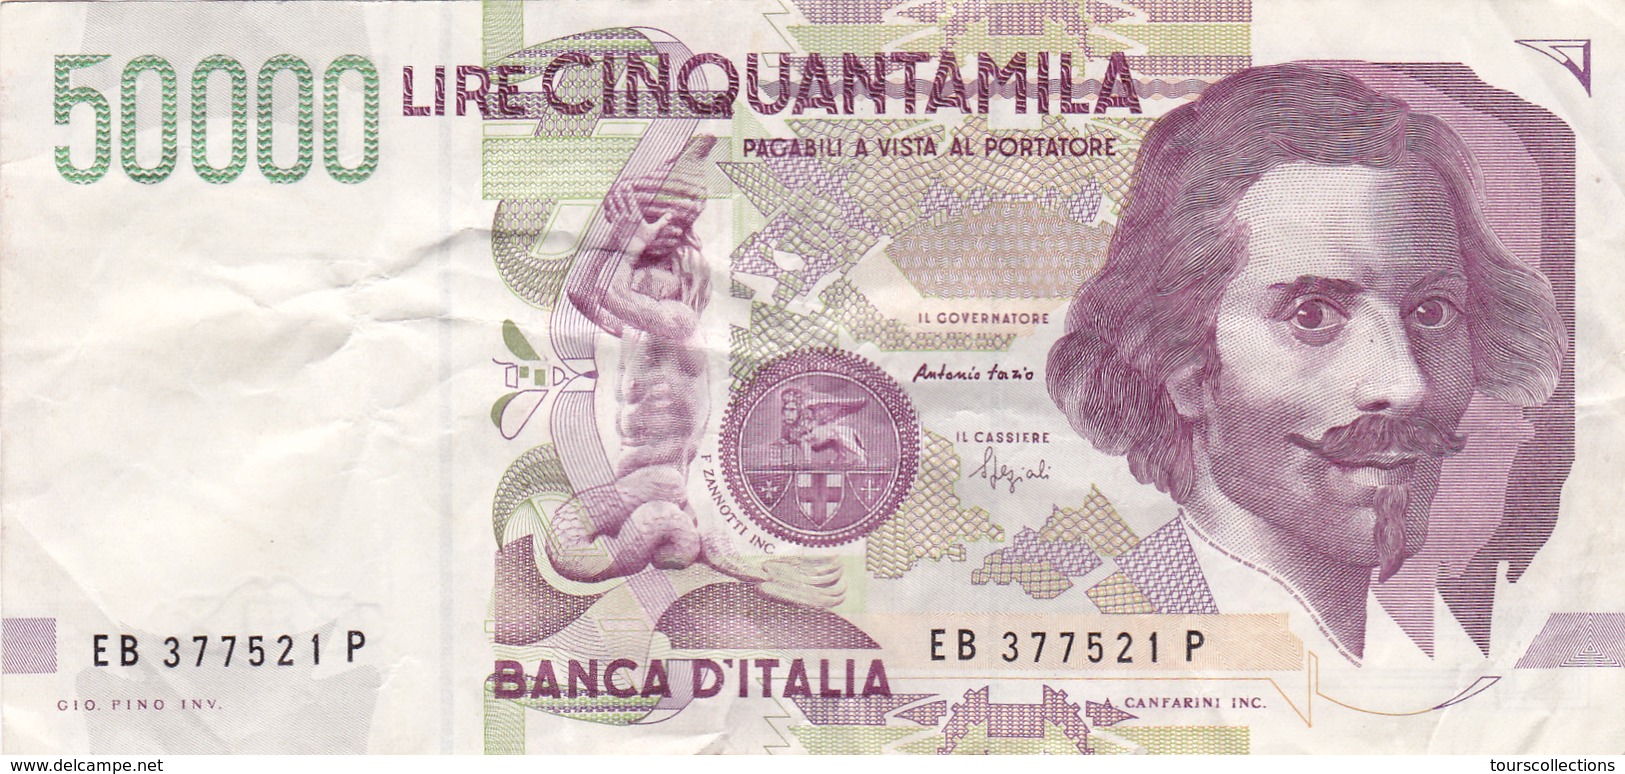 Billet ITALIE 50 000 Lire TTB De 09/12/1992  Portrait De Bernini @ PICK 116 B @ - 50000 Liras